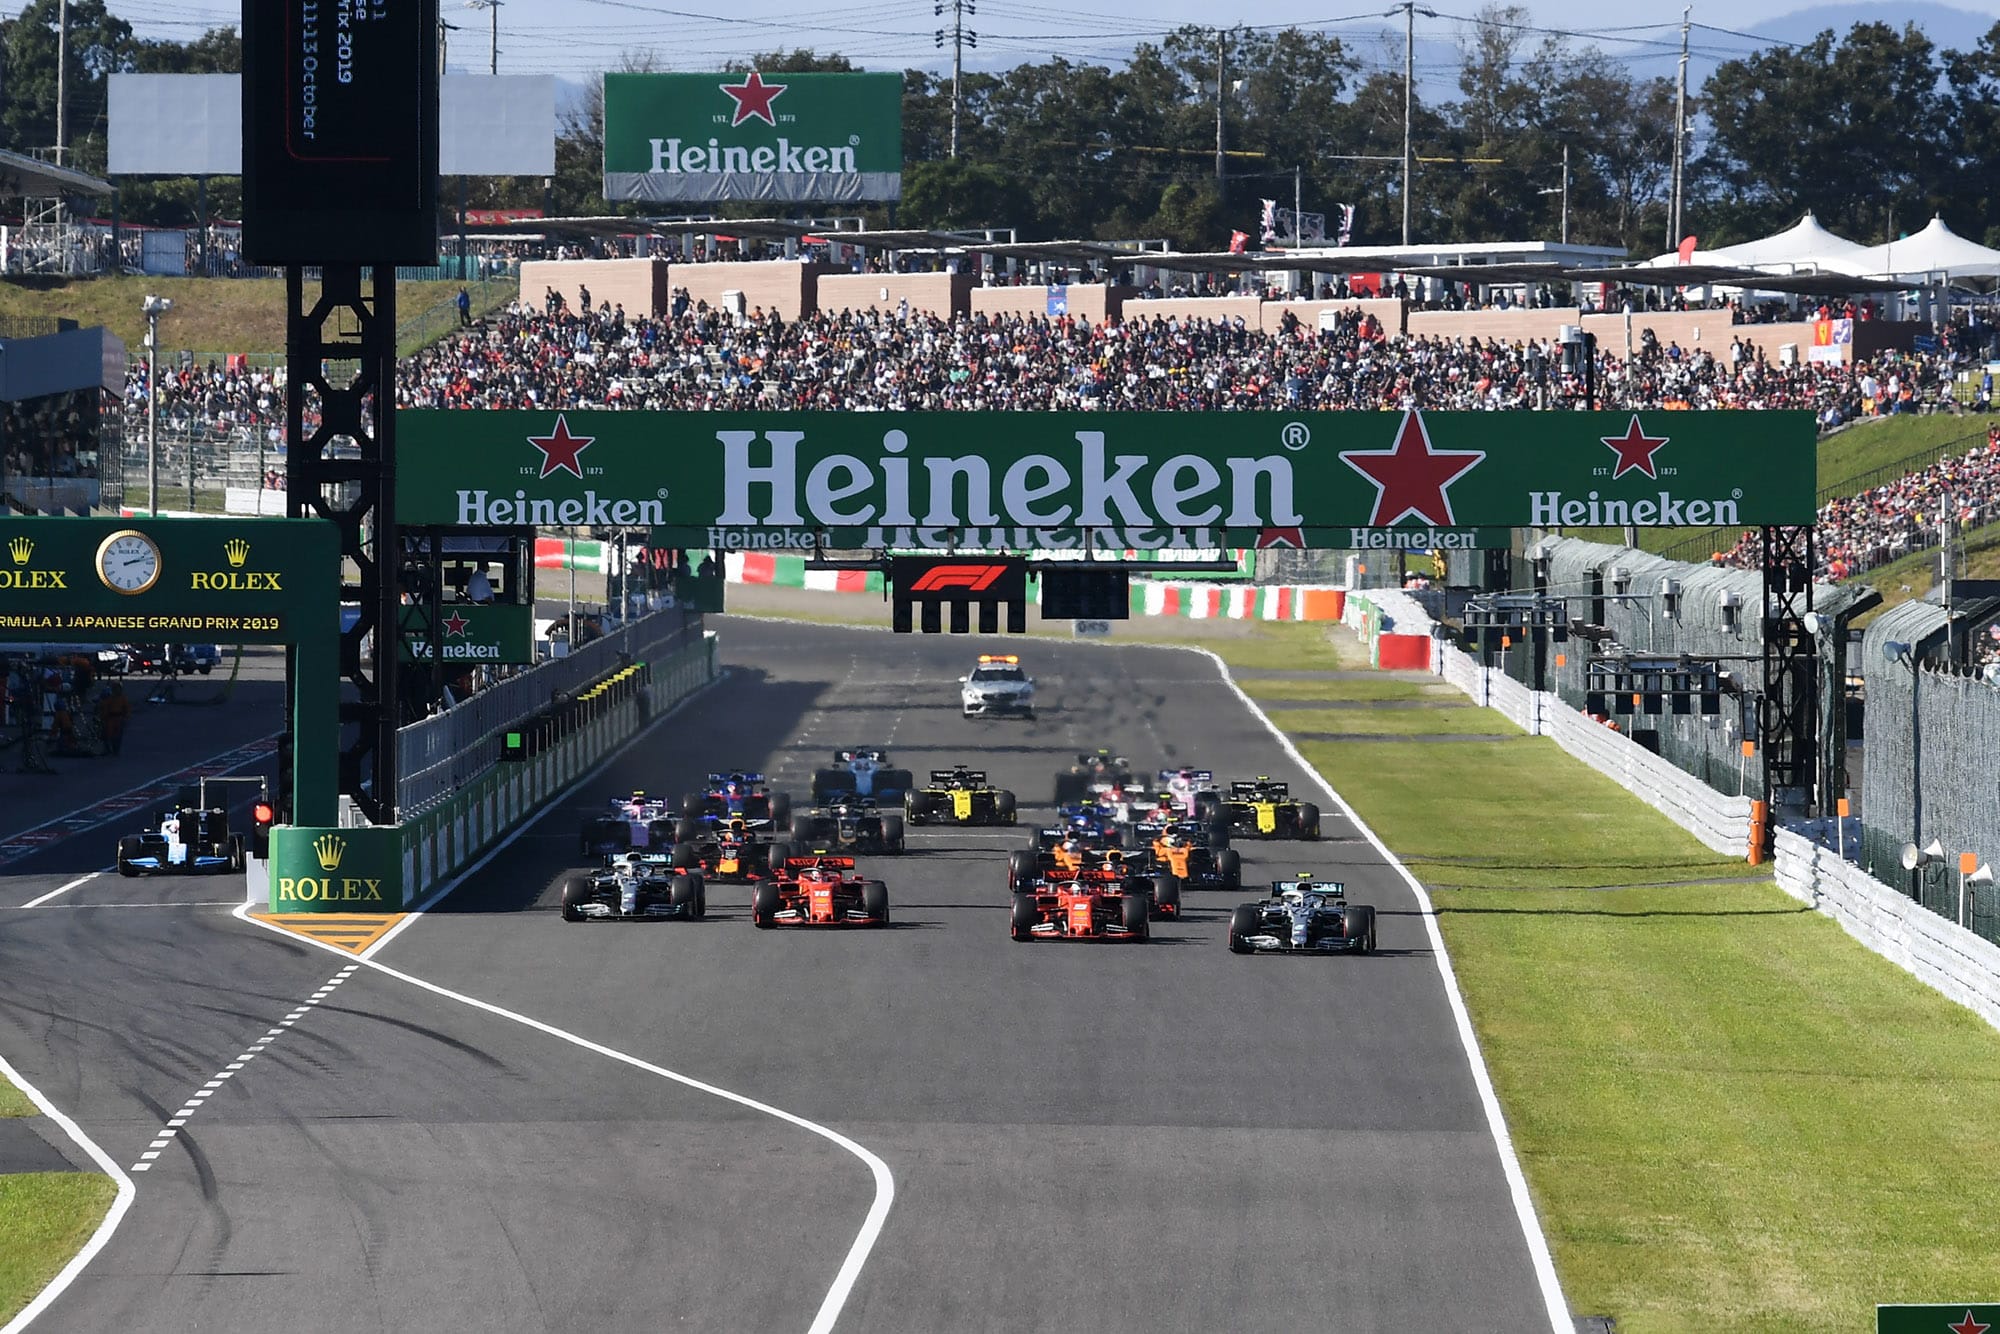 2019 F1 Japanese Grand Prix race results Motor Sport Magazine